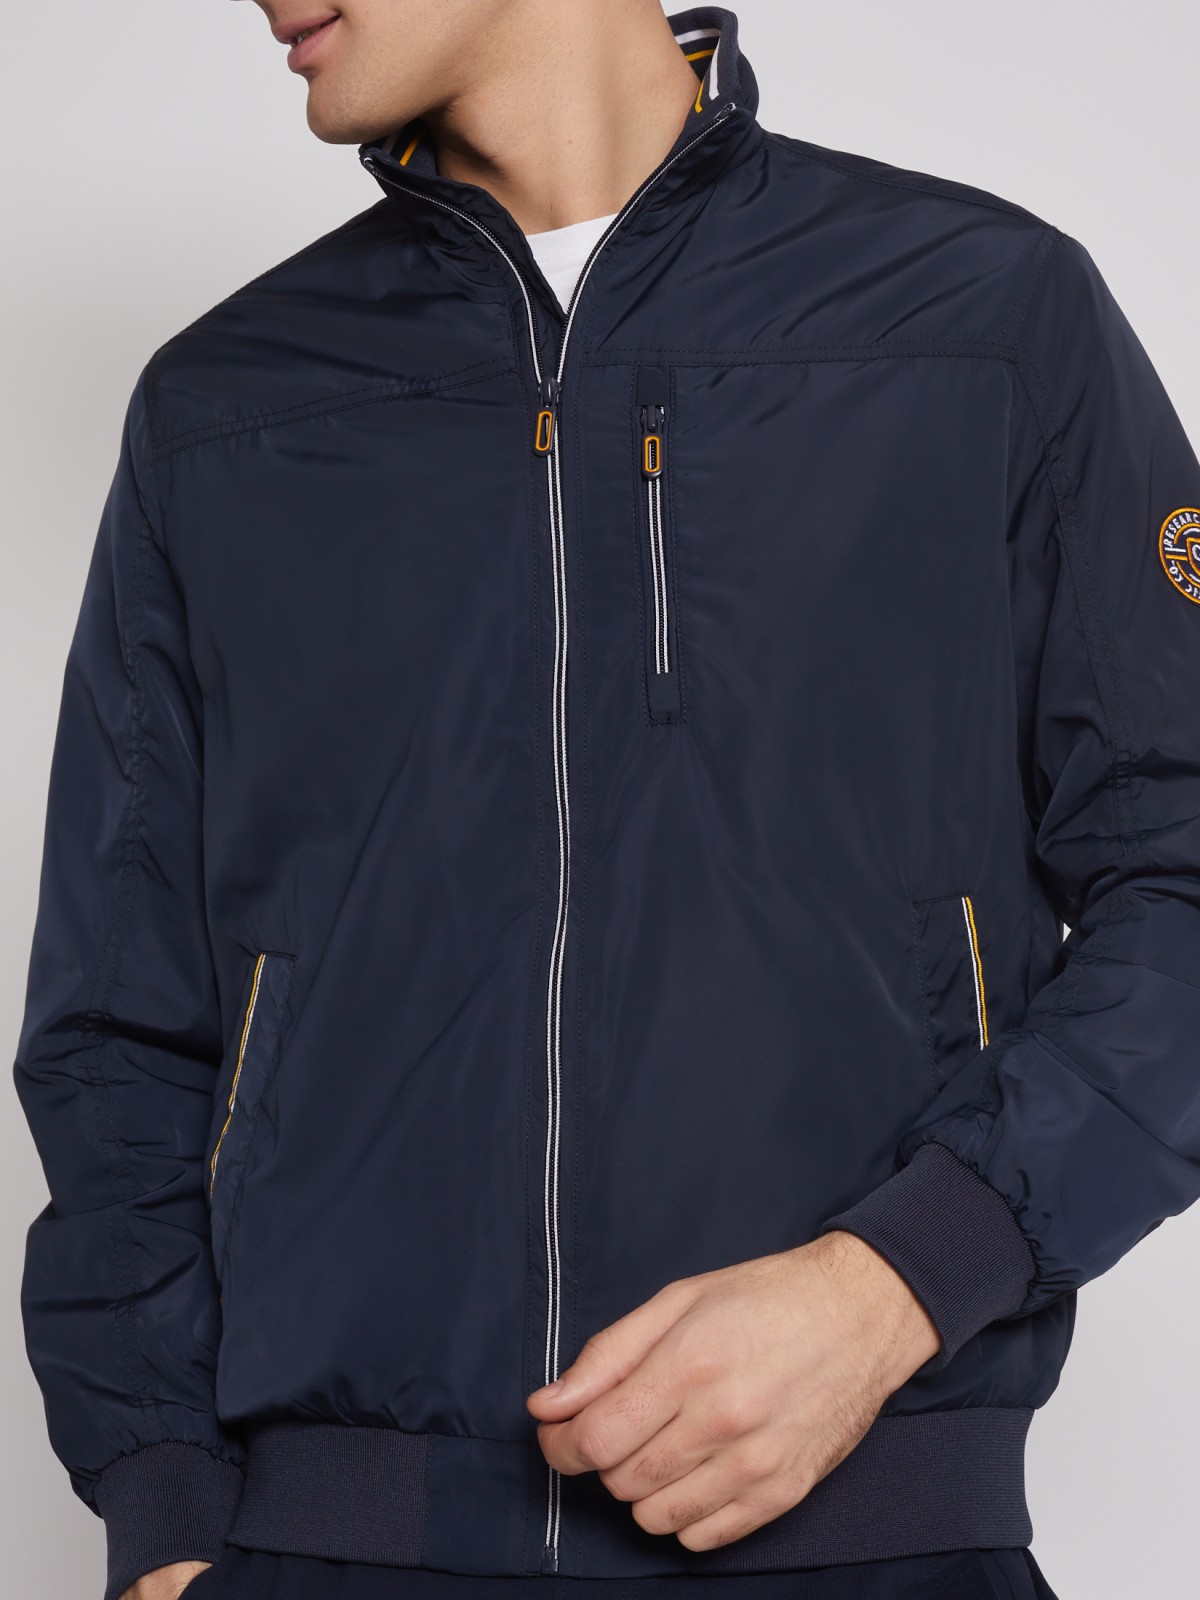 Куртка с воротником-стойкой zolla 012215602034, цвет темно-синий, размер L - фото 5